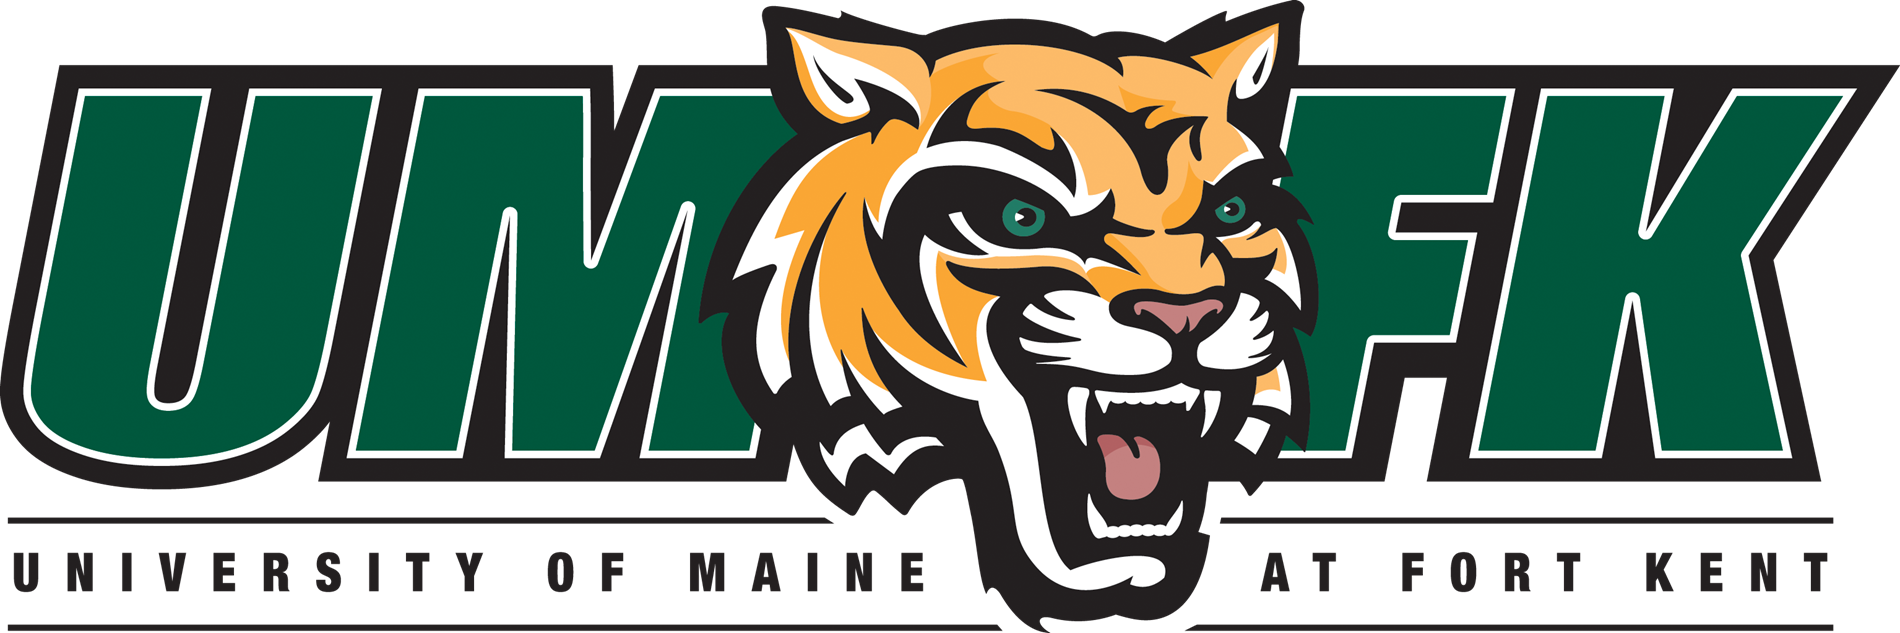 Univ of Maine Fort Kent Logo